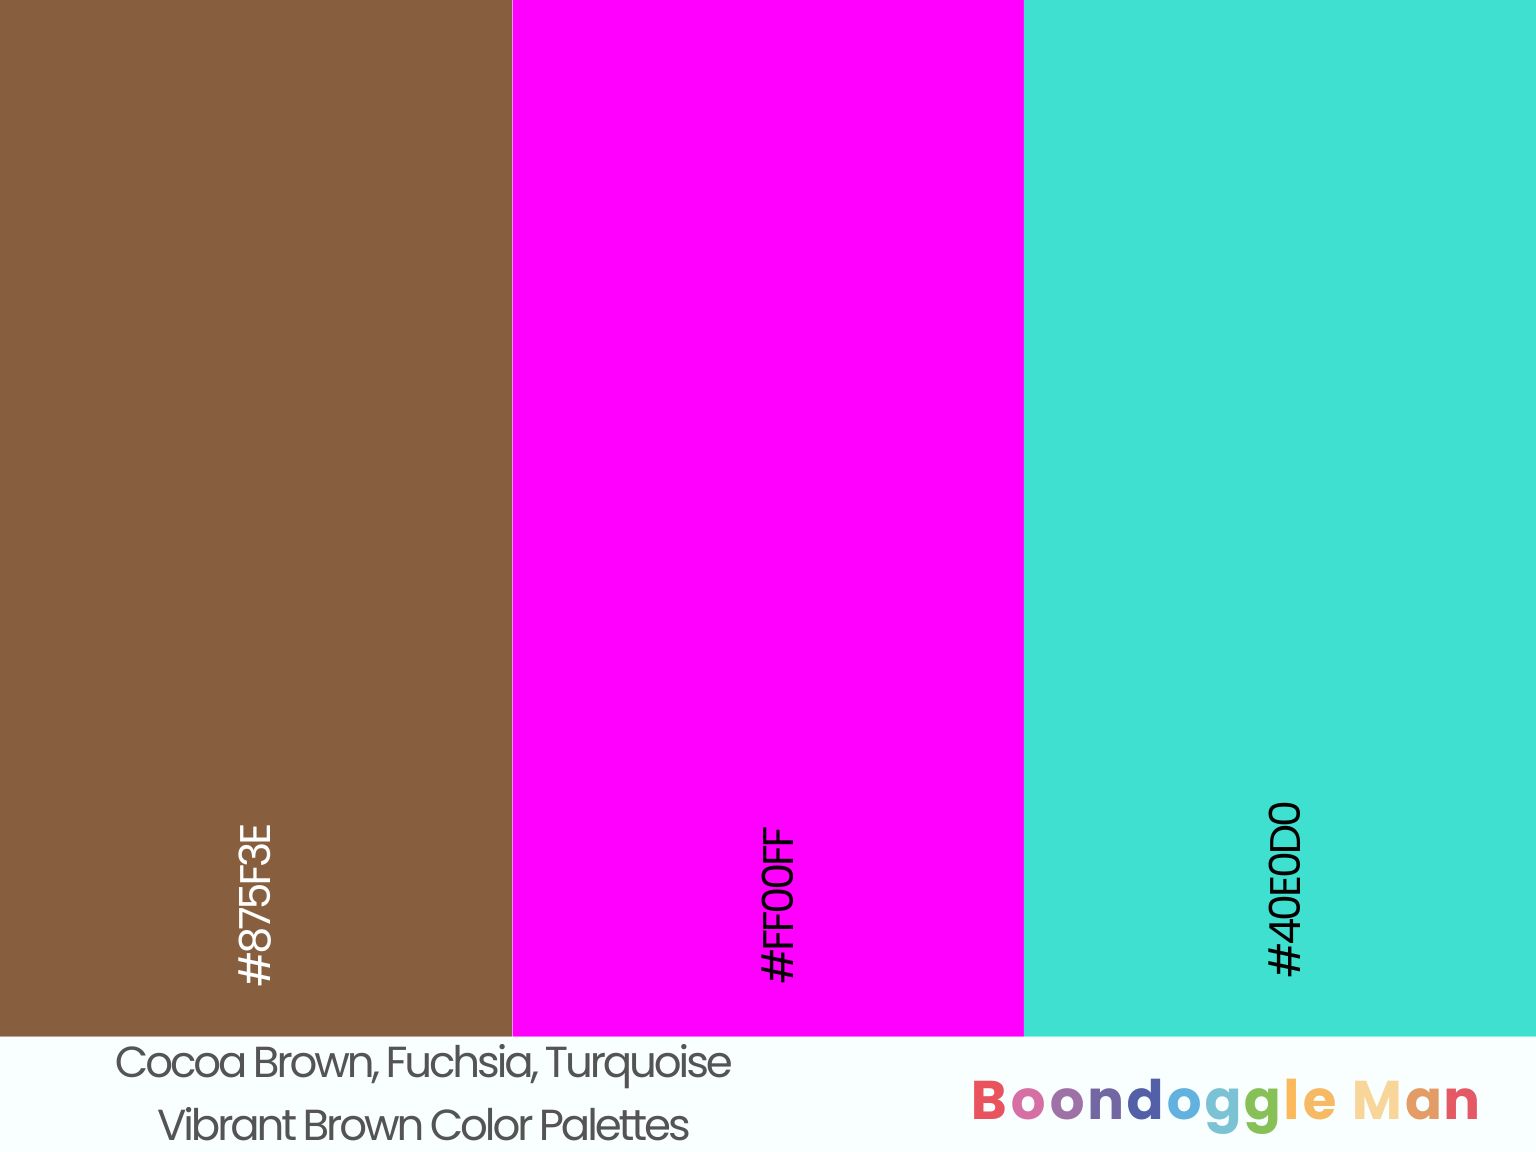 Cocoa Brown, Fuchsia, Turquoise